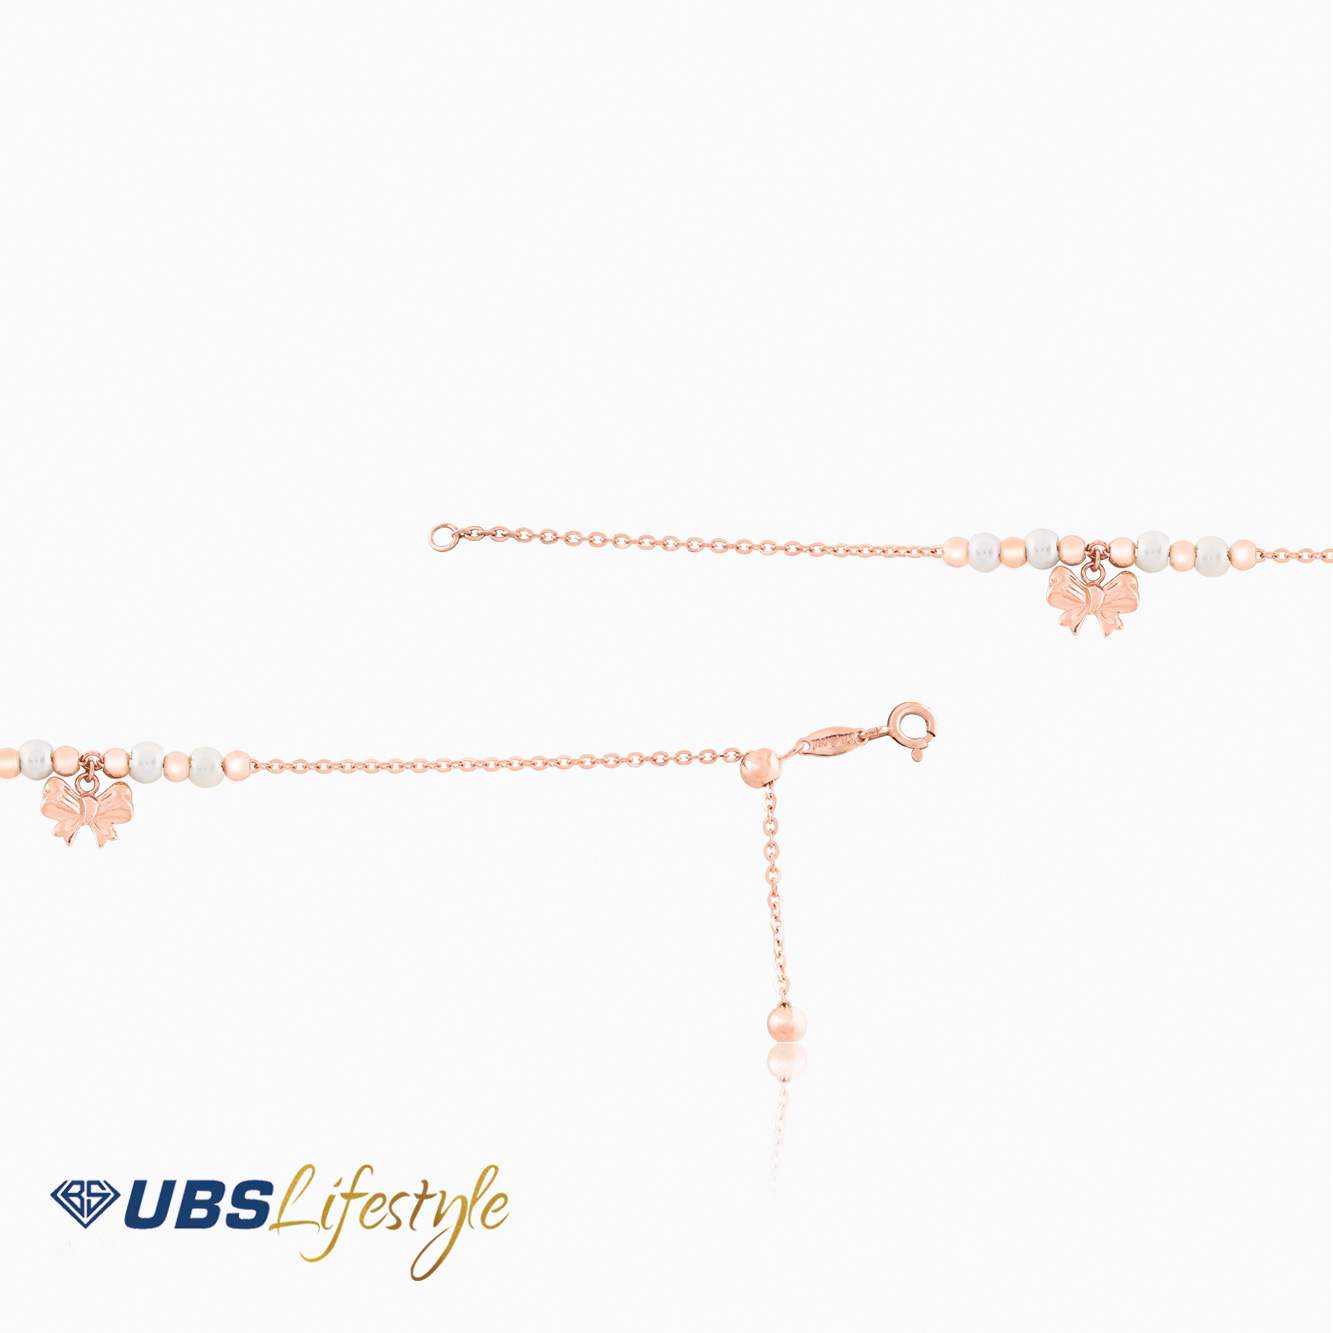 UBS Gelang Emas Pearly - Kgv6371 - 17K